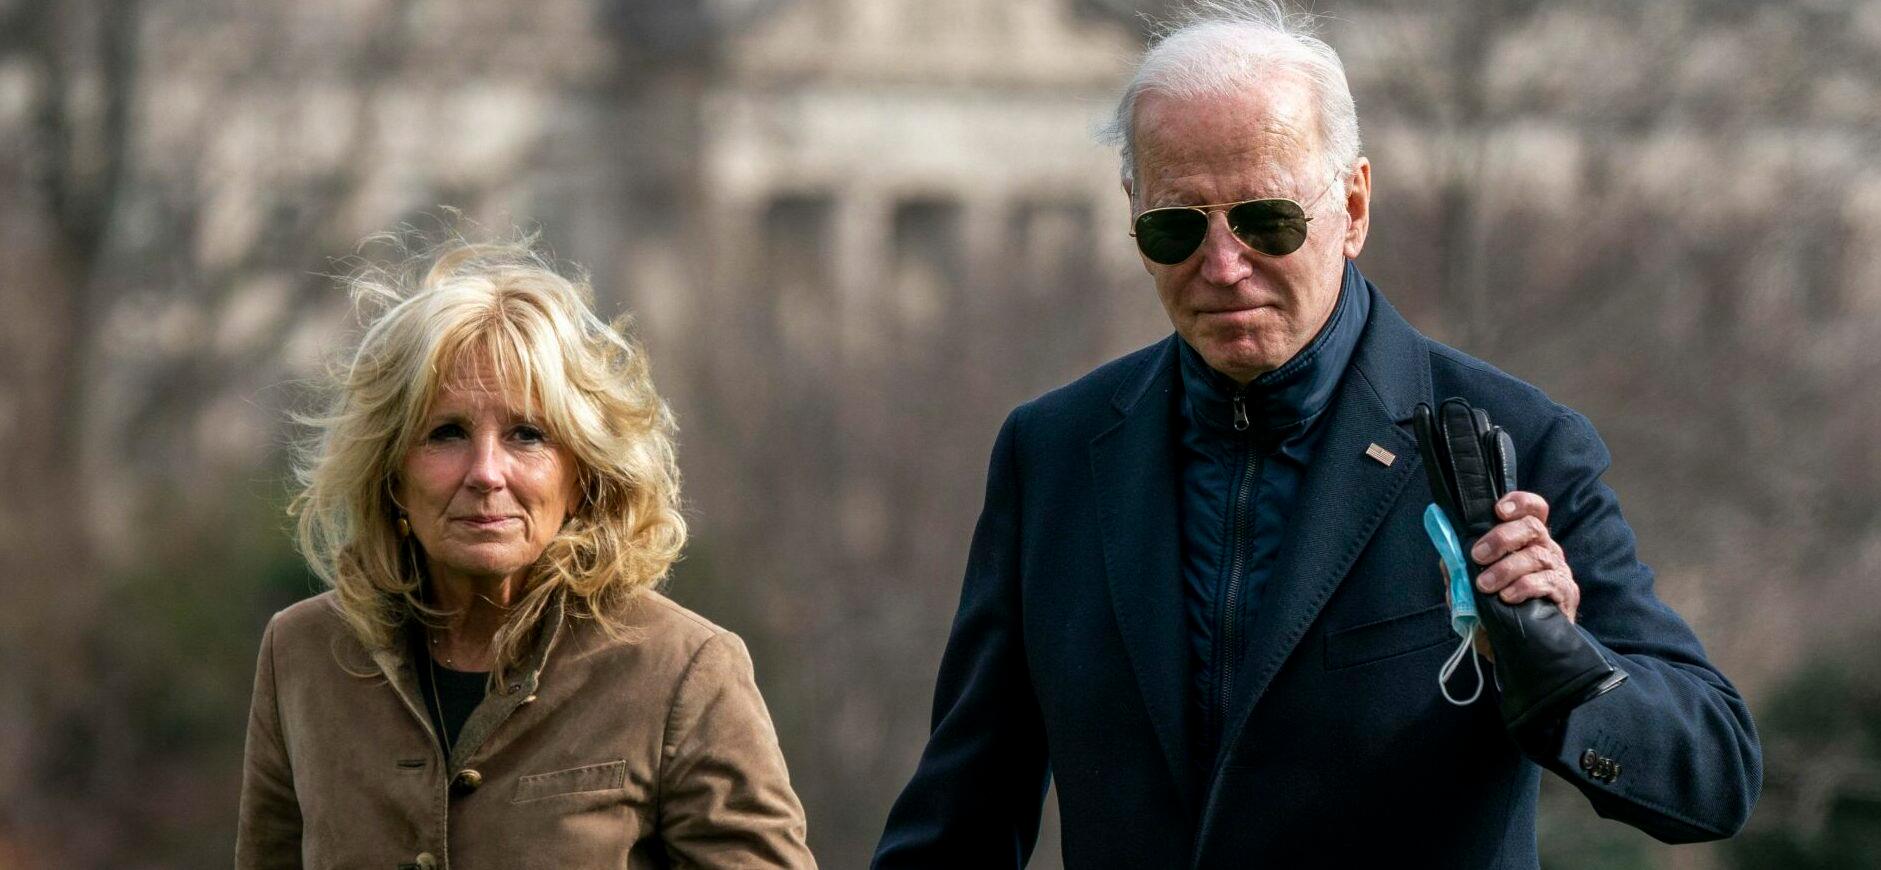 US President Joe Biden and First lady Jill Biden returns to the White House following a weekend at Camp David.